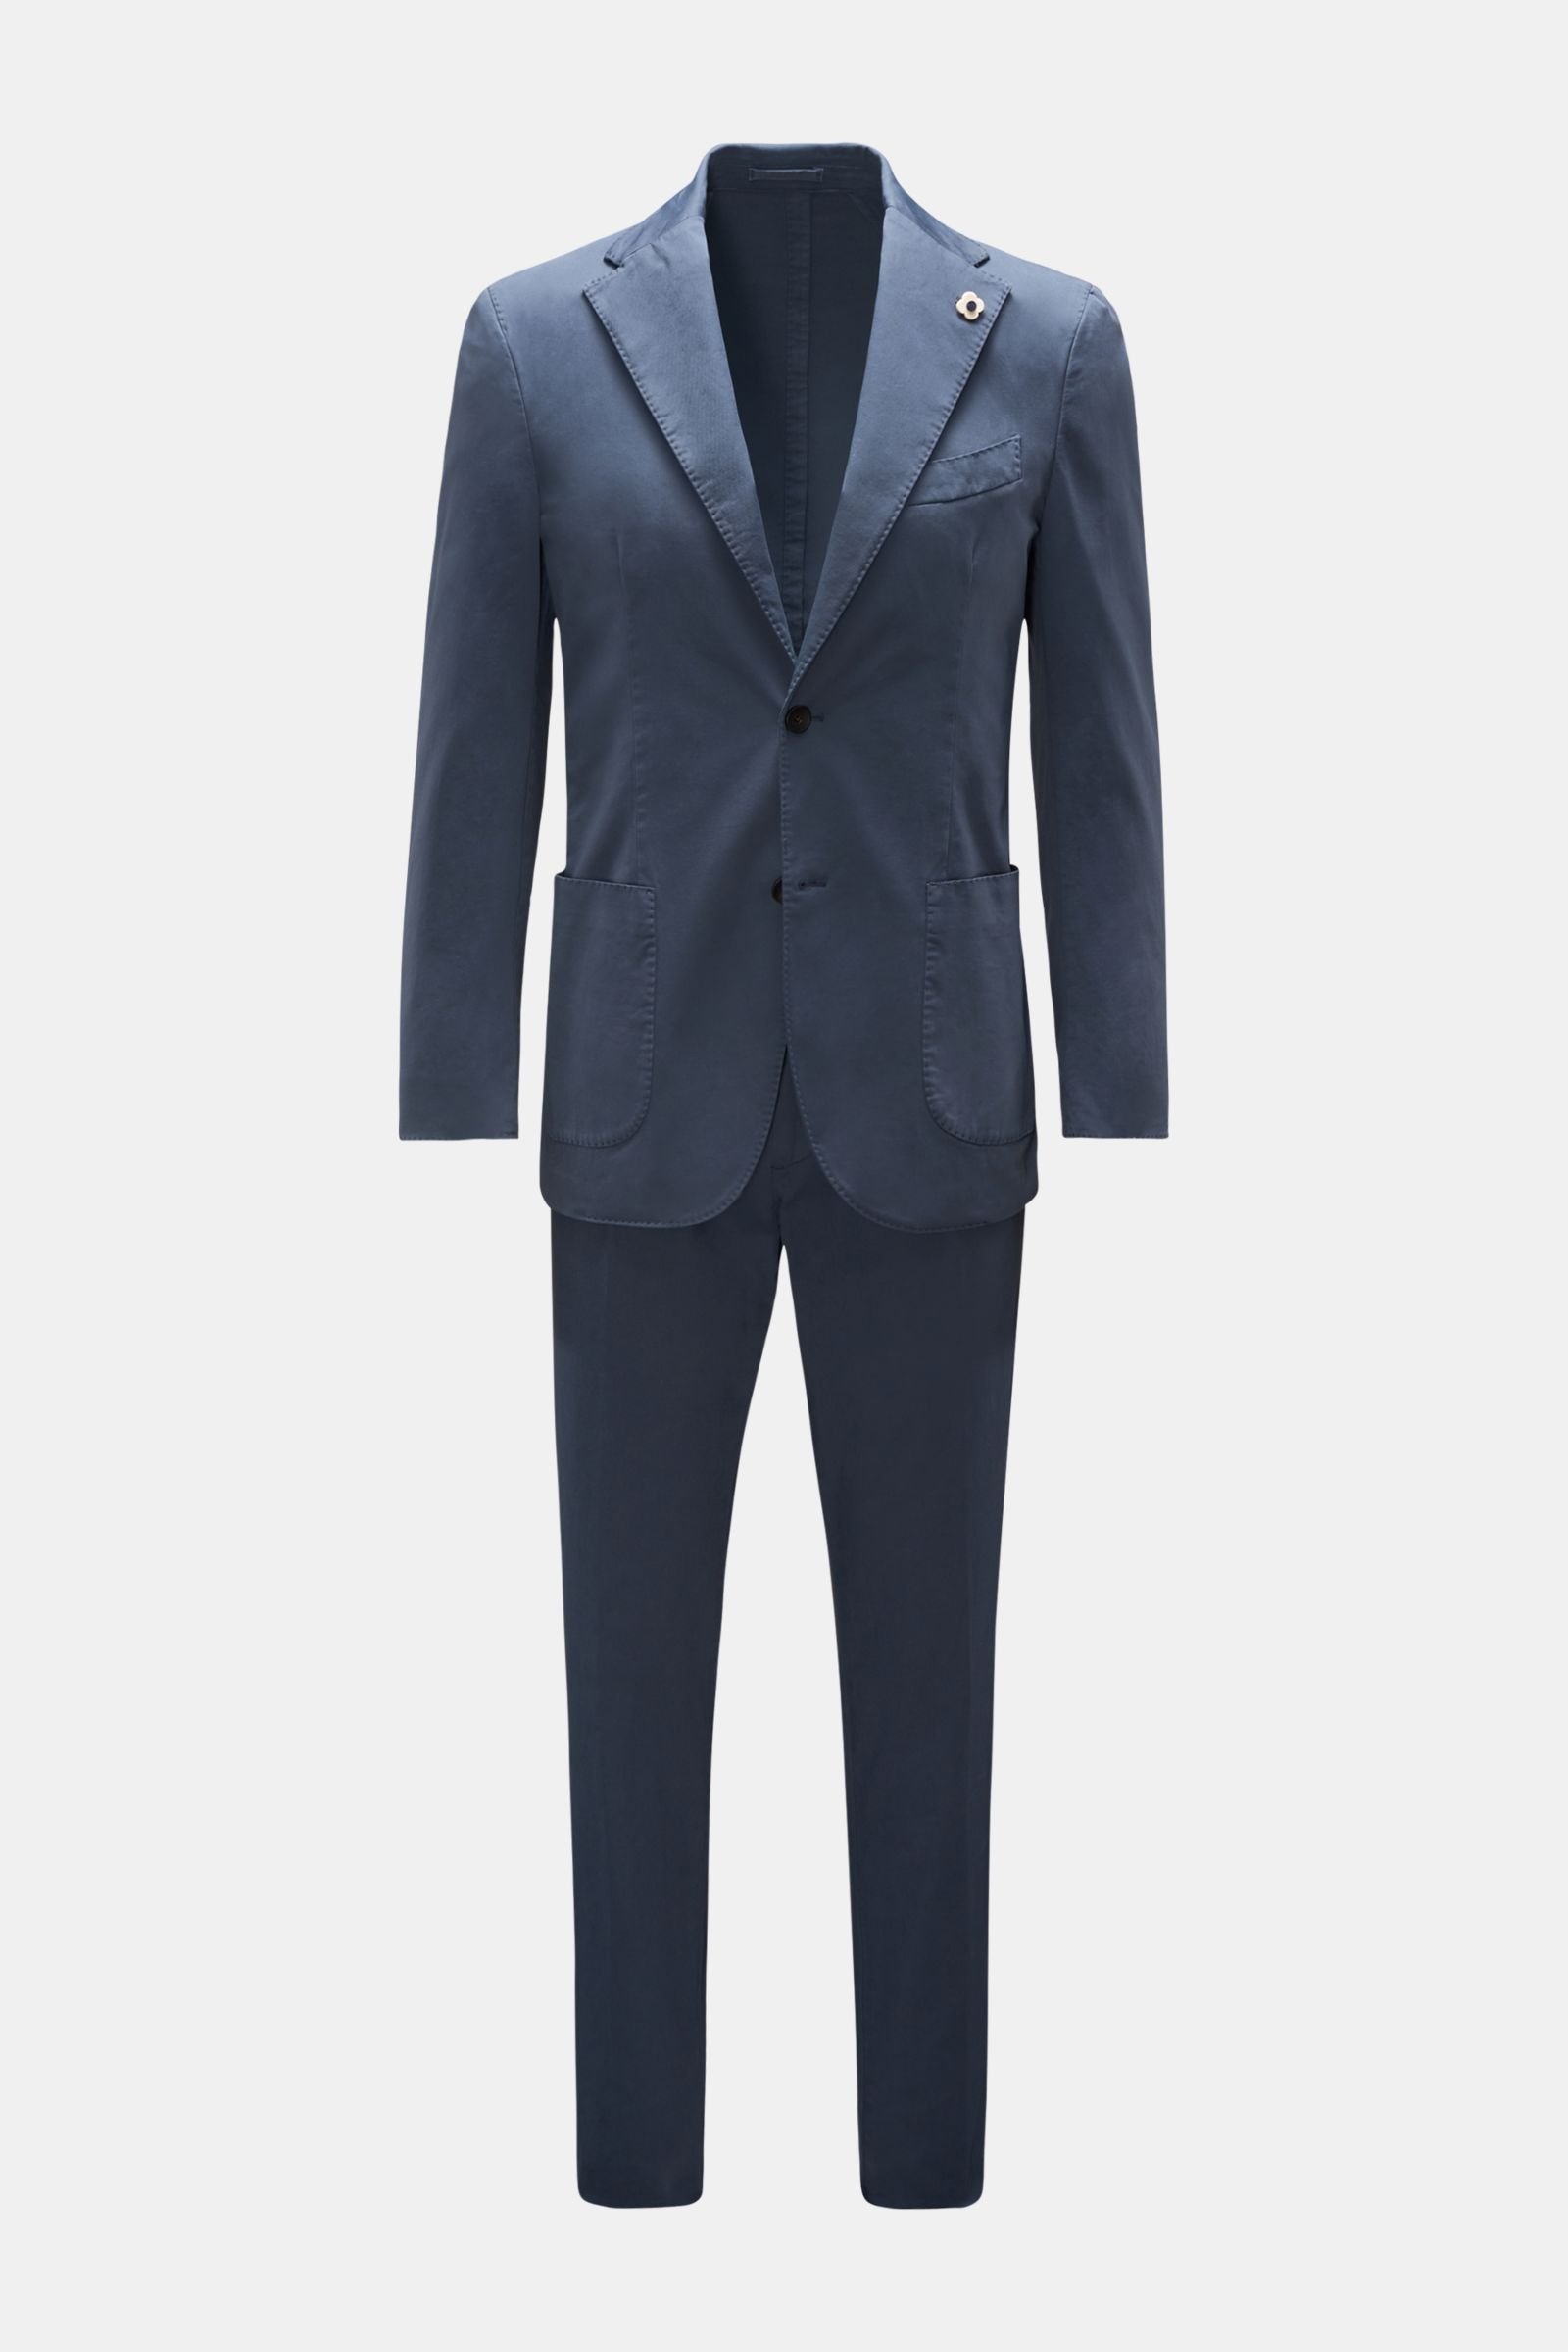 LARDINI suit grey-blue | BRAUN Hamburg